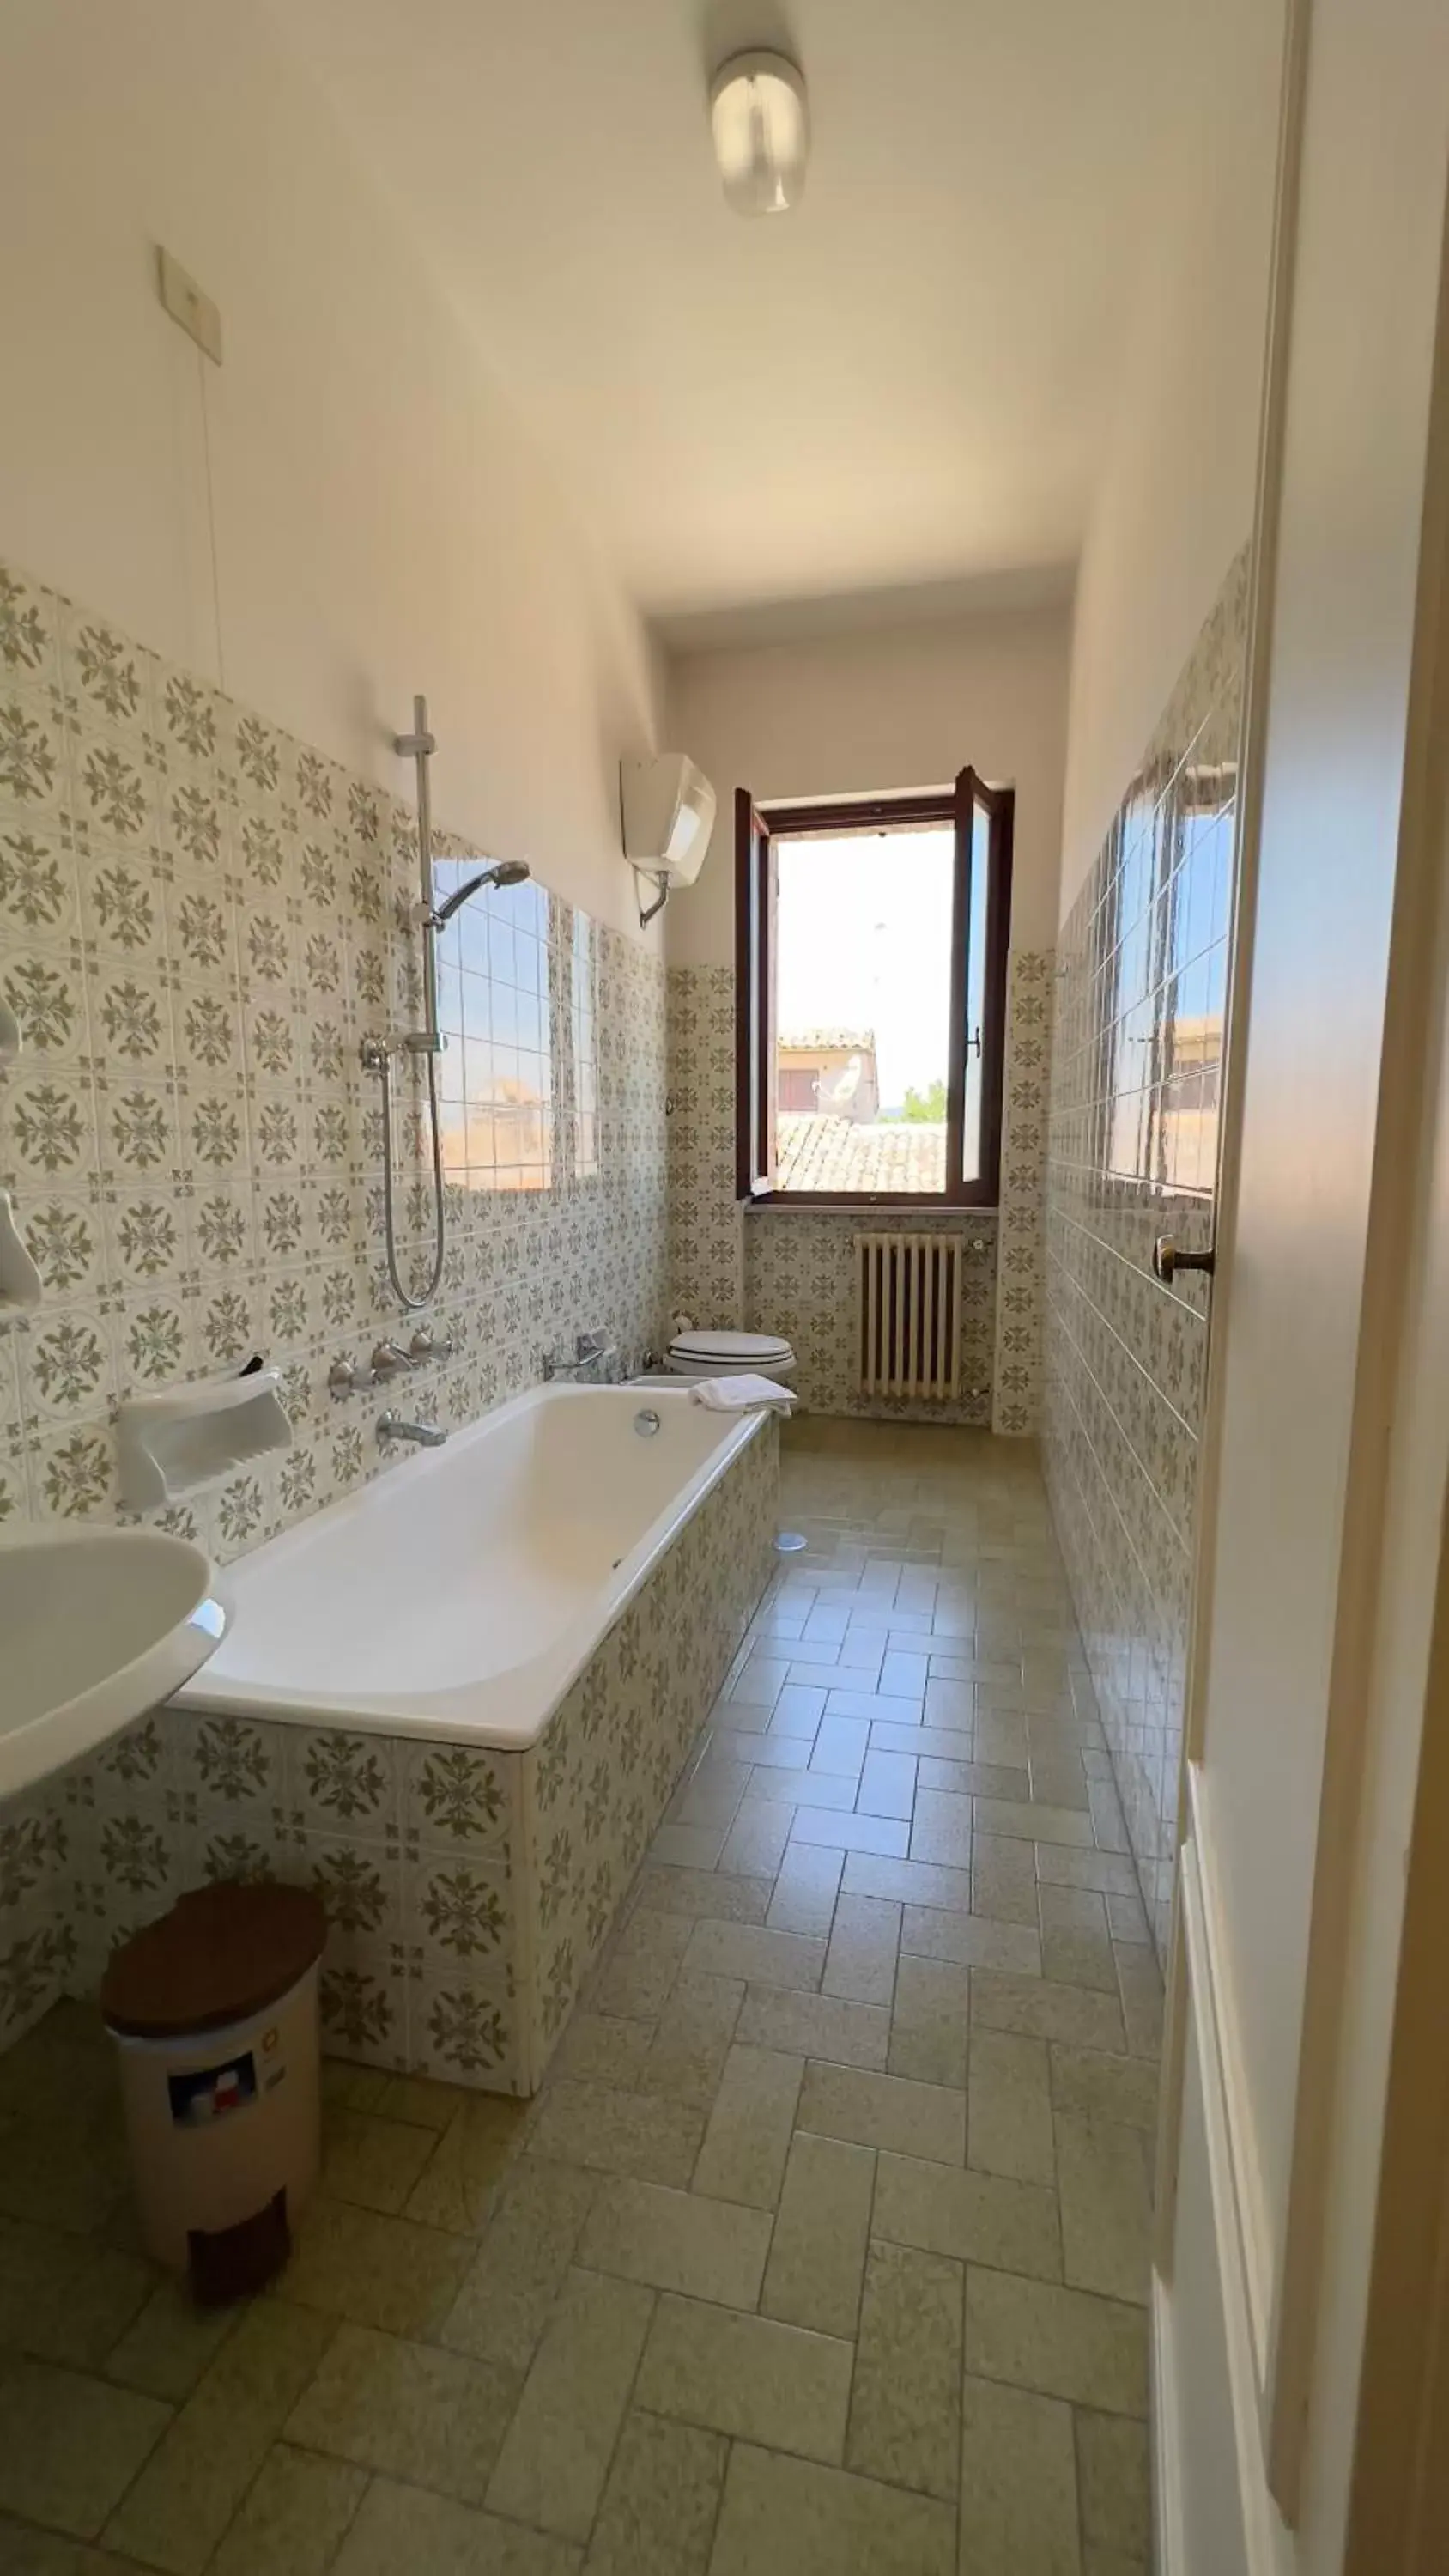 Bathroom in Monastero SS. Annunziata